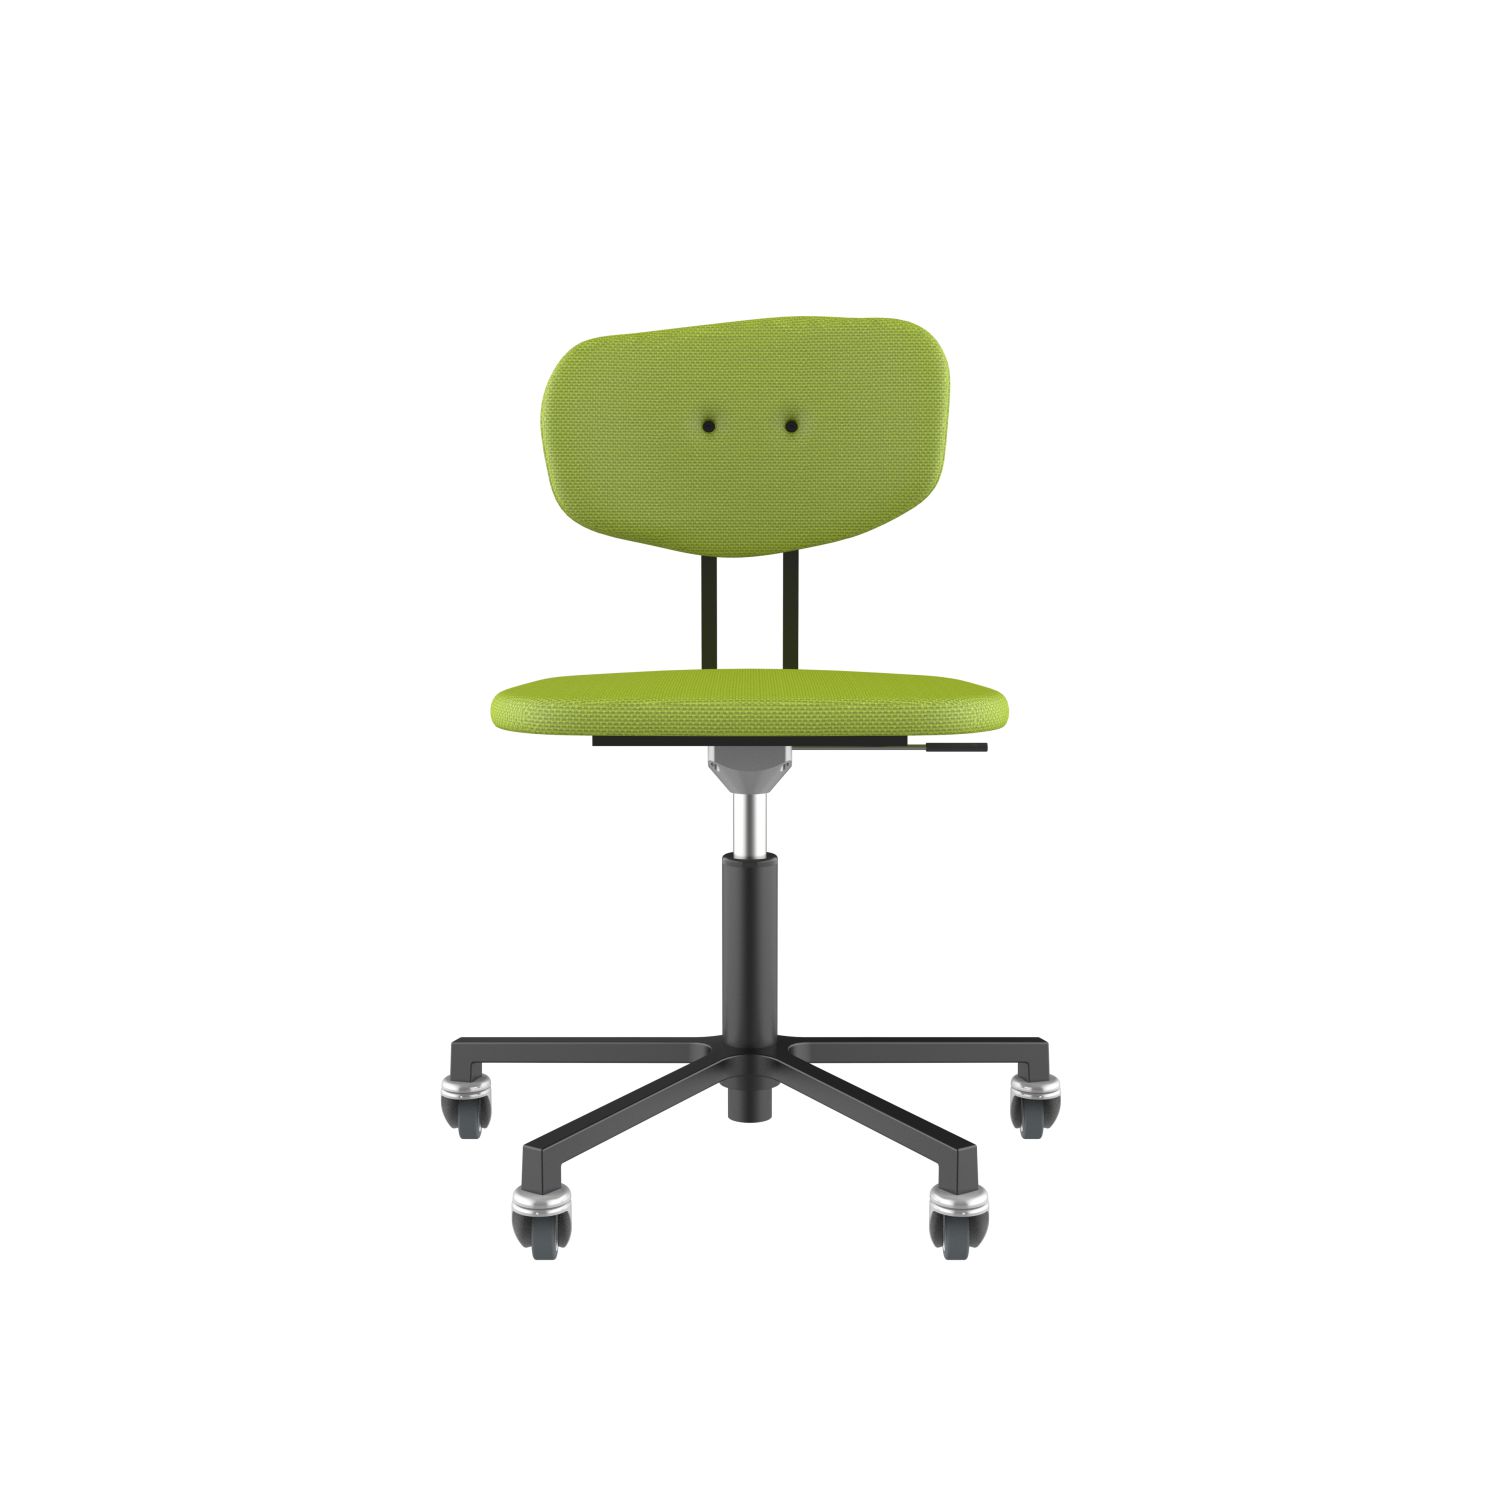 lensvelt maarten baas office chair without armrests backrest c fairway green 020 black ral9005 soft wheels